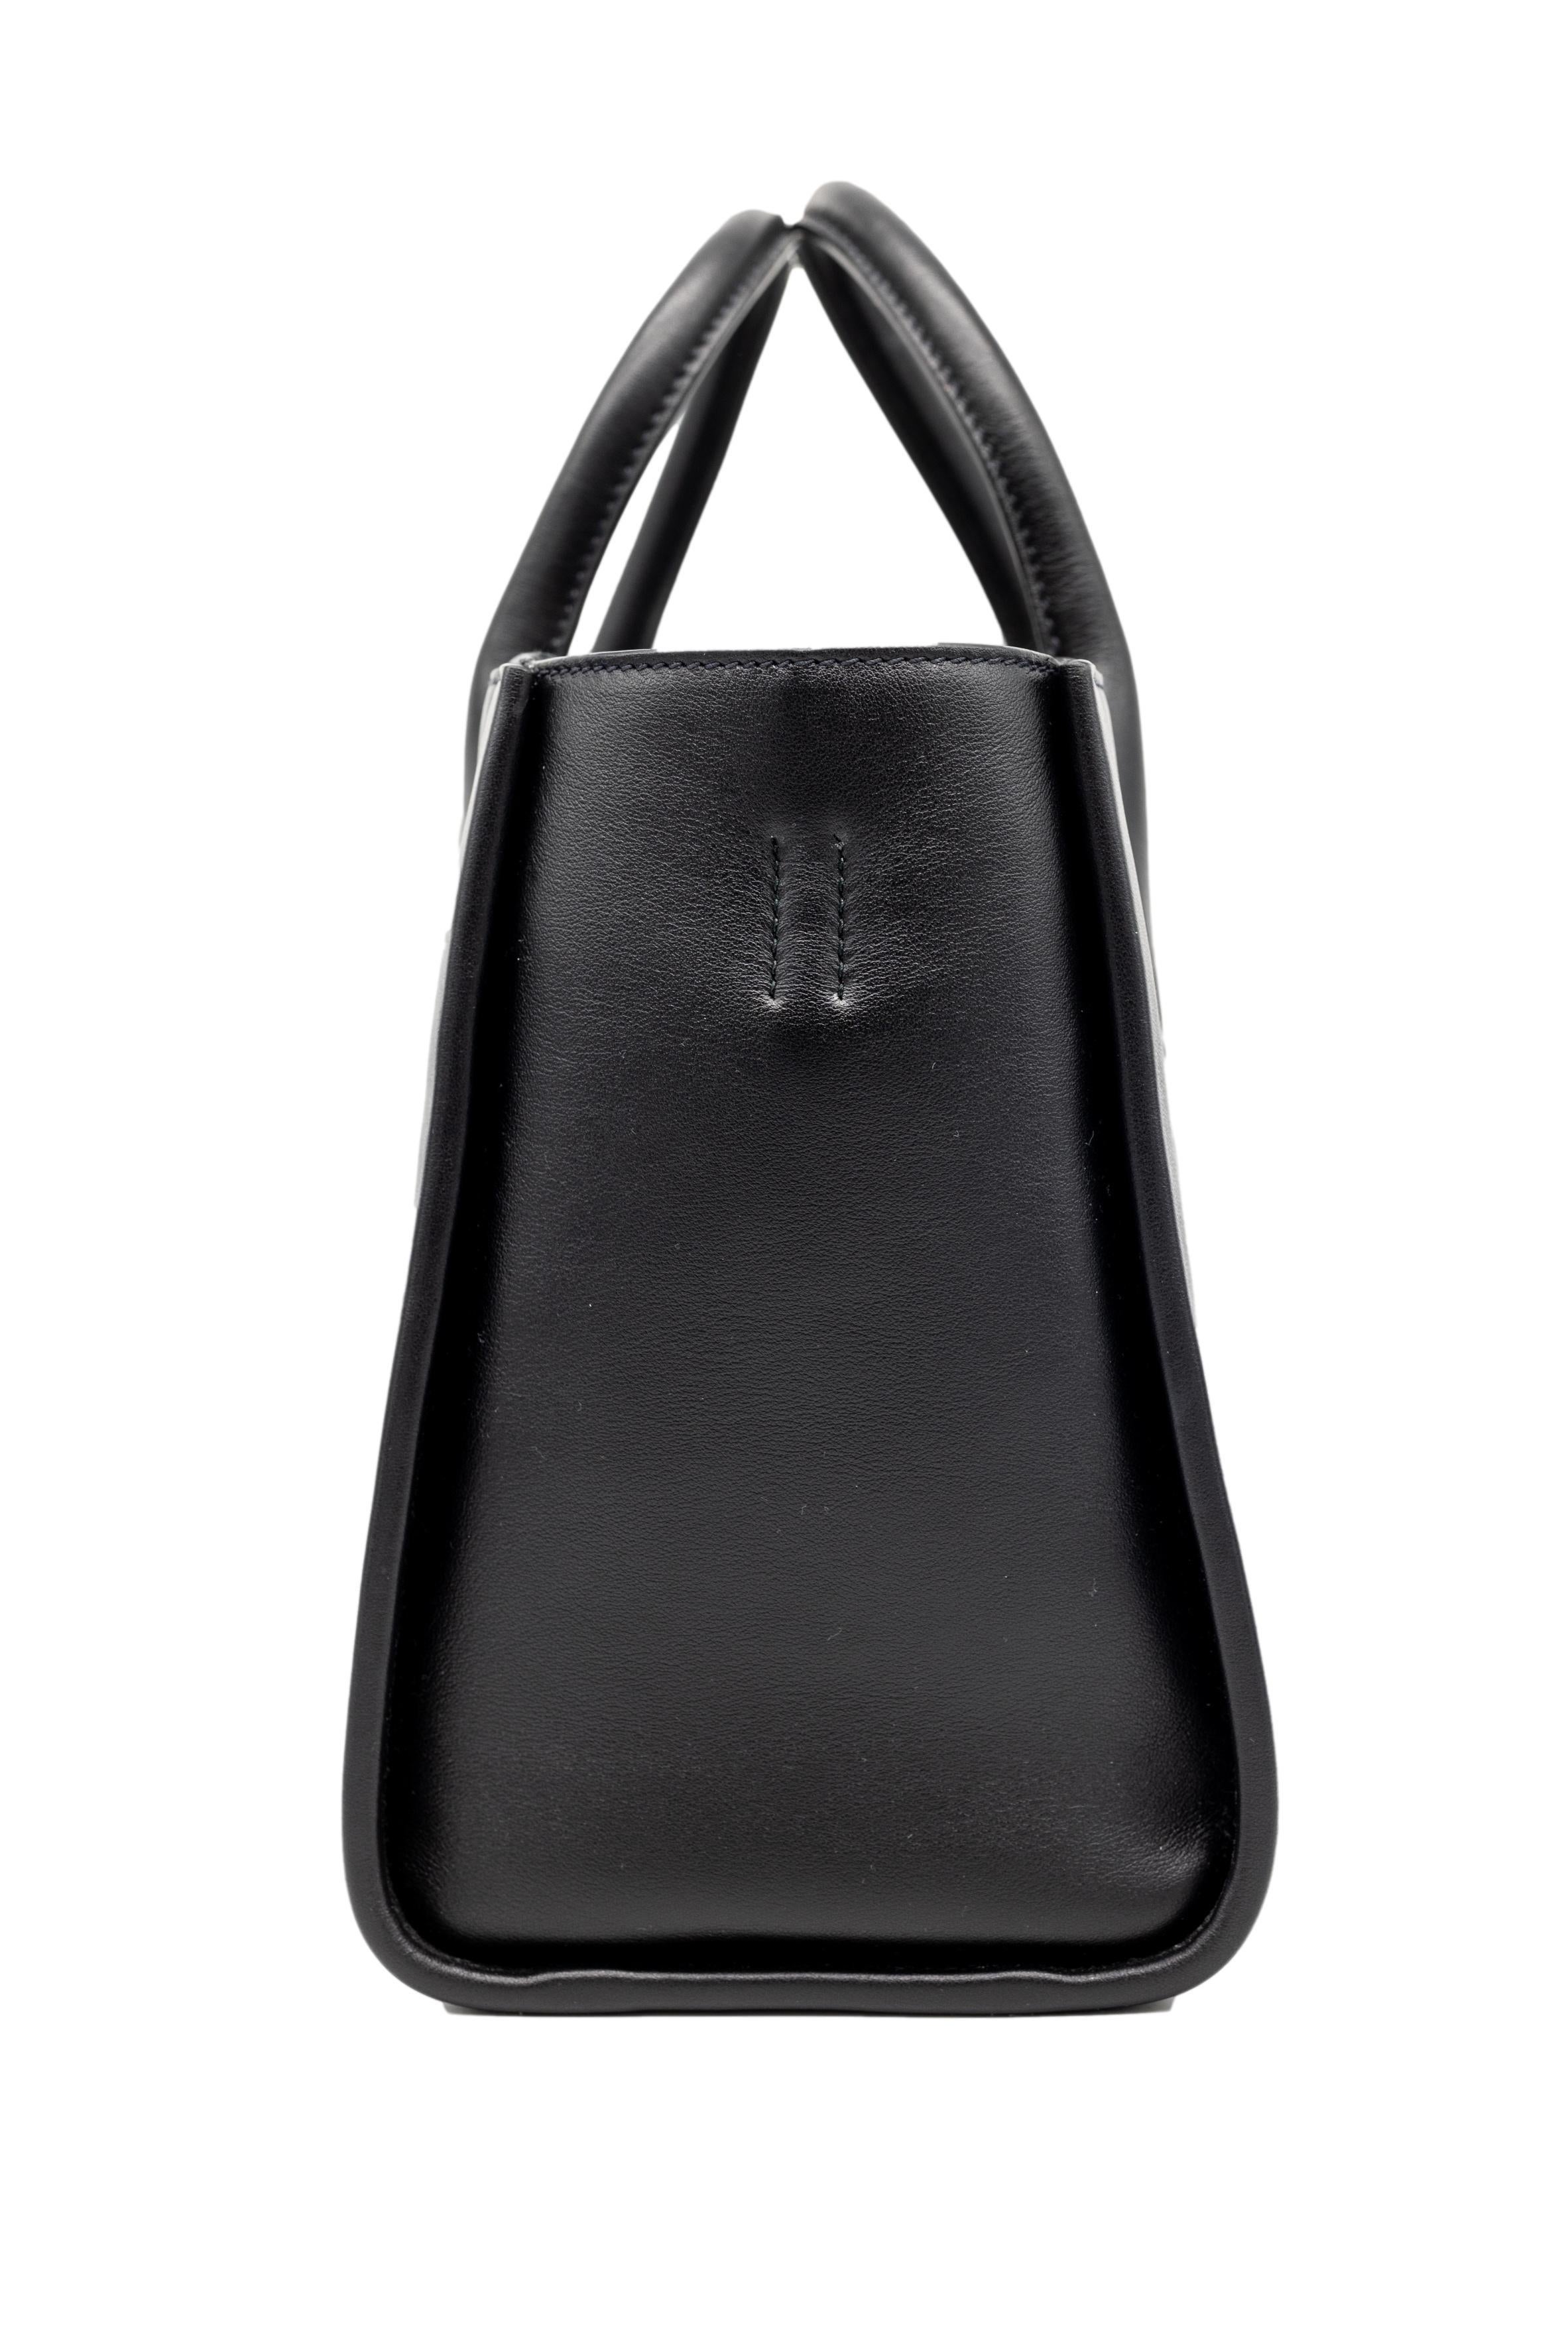 Prada Black Vitello Calfskin Leather Grace Lux Concept Shoulder Tote, 2018. 2